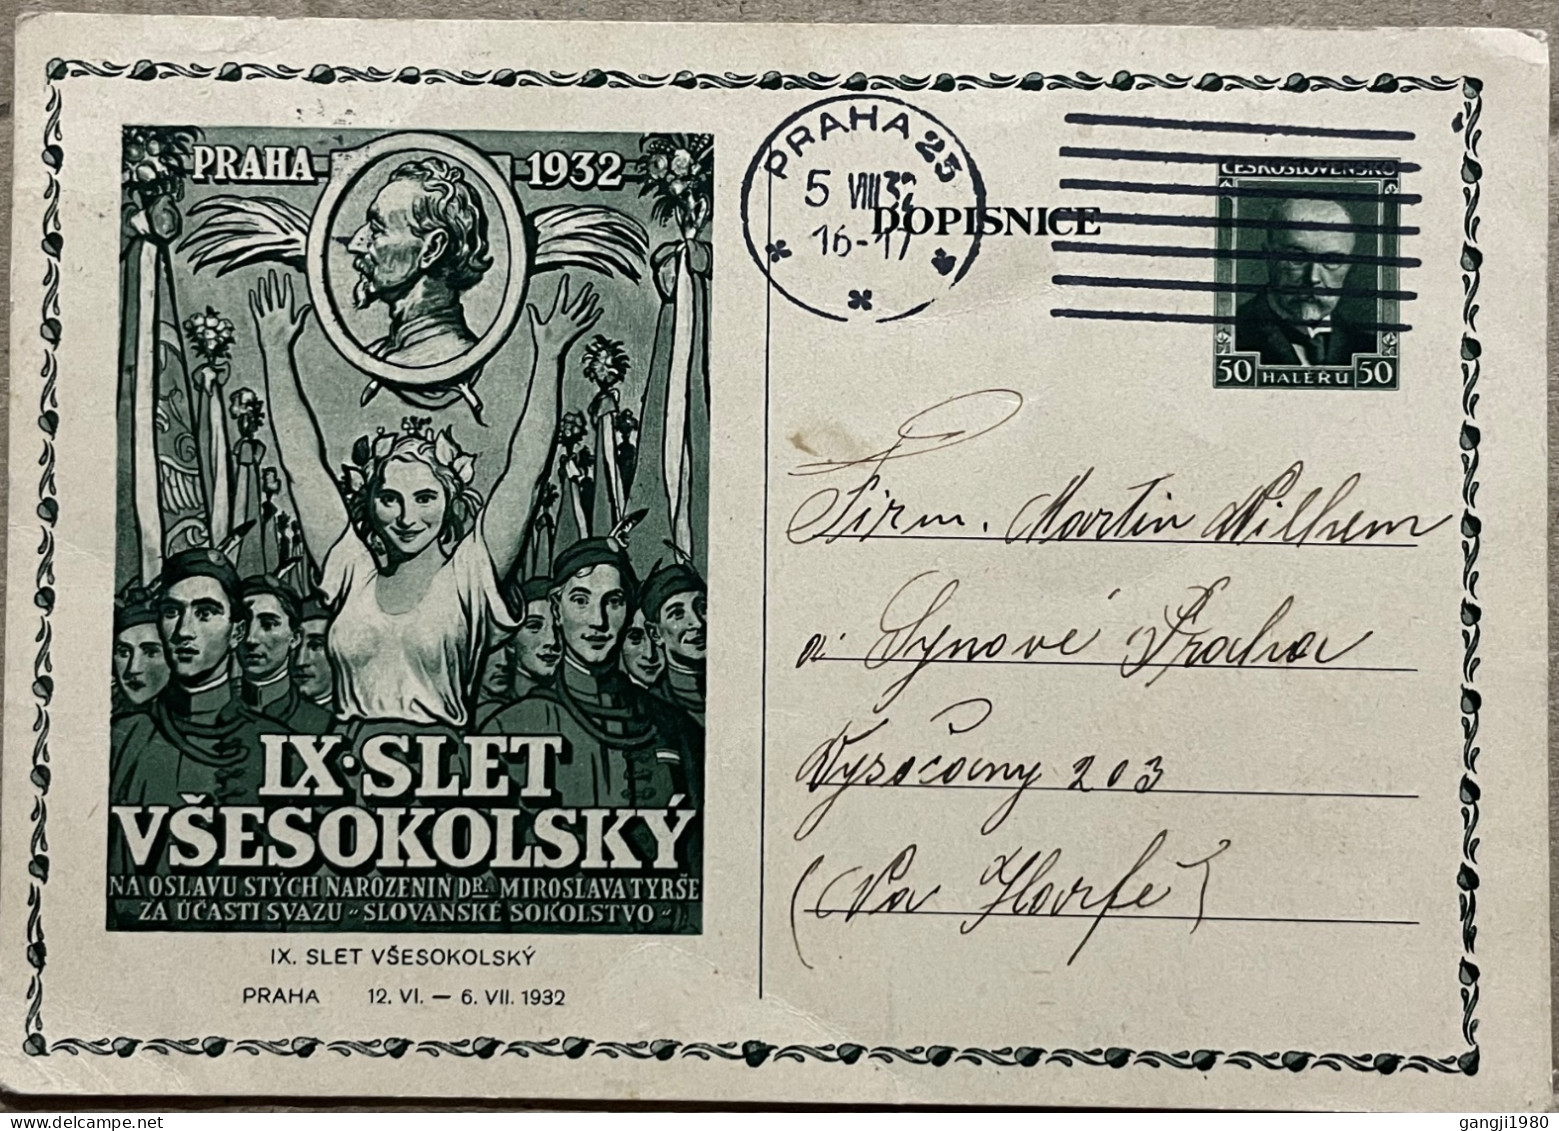 CZECHOSLOVAKIA 1932, STATIONERY CARD USED, ILLUSTRATE, WOMAN, CHARMING LADY, SLET YSESOKOLSKY, PRAHA CITY CANCEL - Briefe U. Dokumente